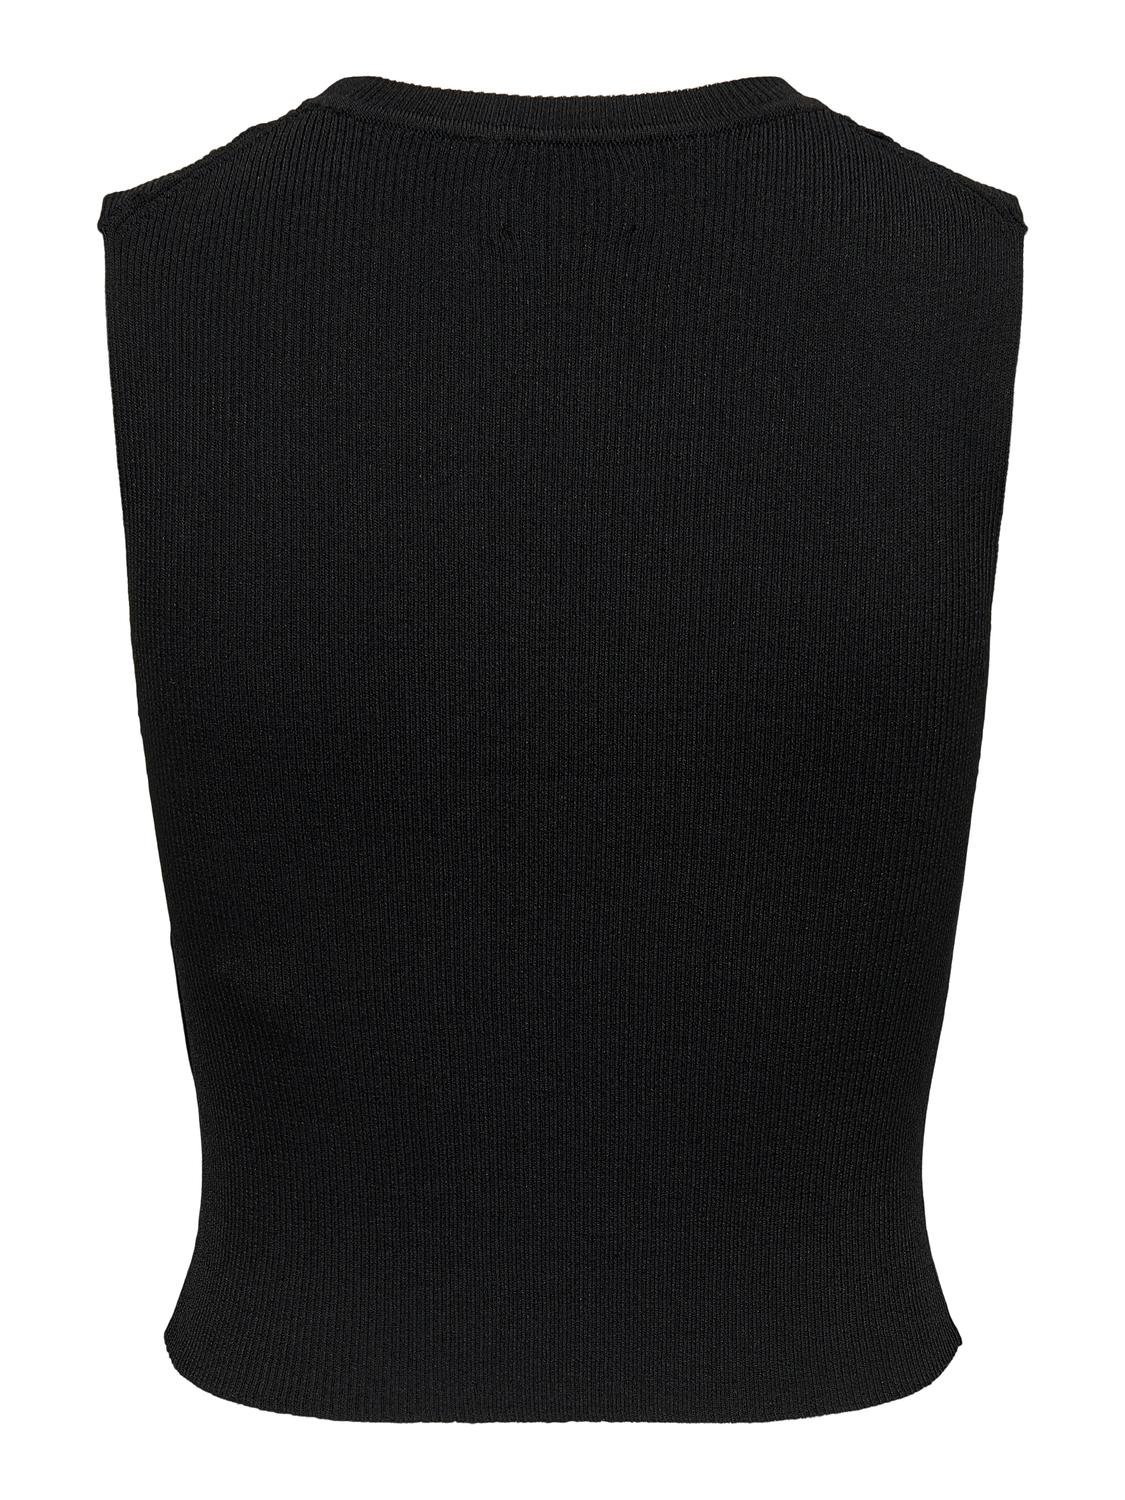 ONLY Regular Fit Round Neck Knit top -Black - 15255533